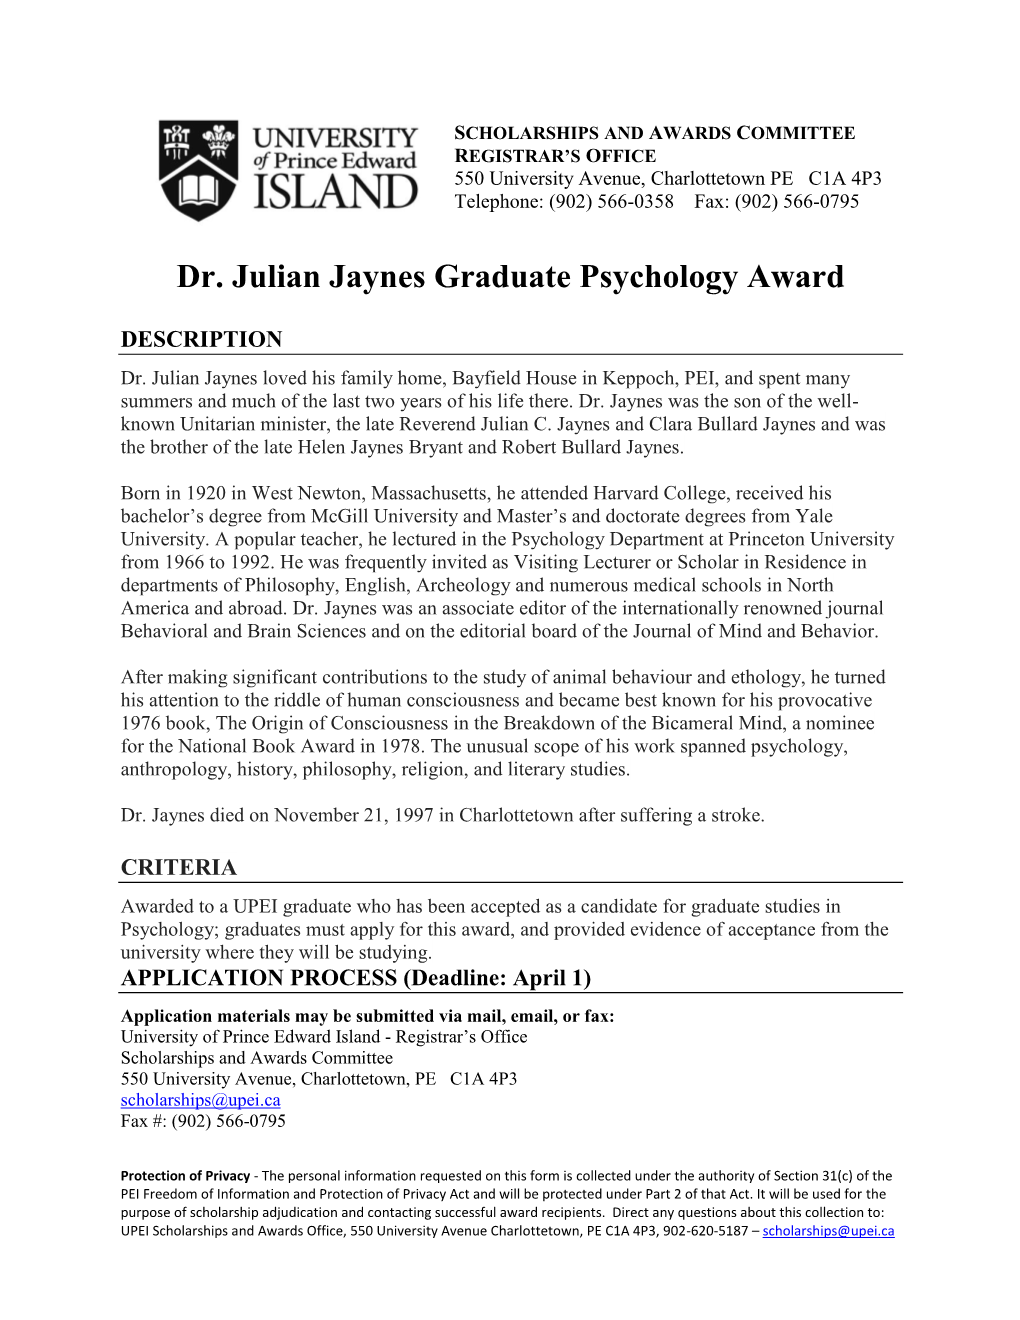 Dr. Julian Jaynes Graduate Psychology Award